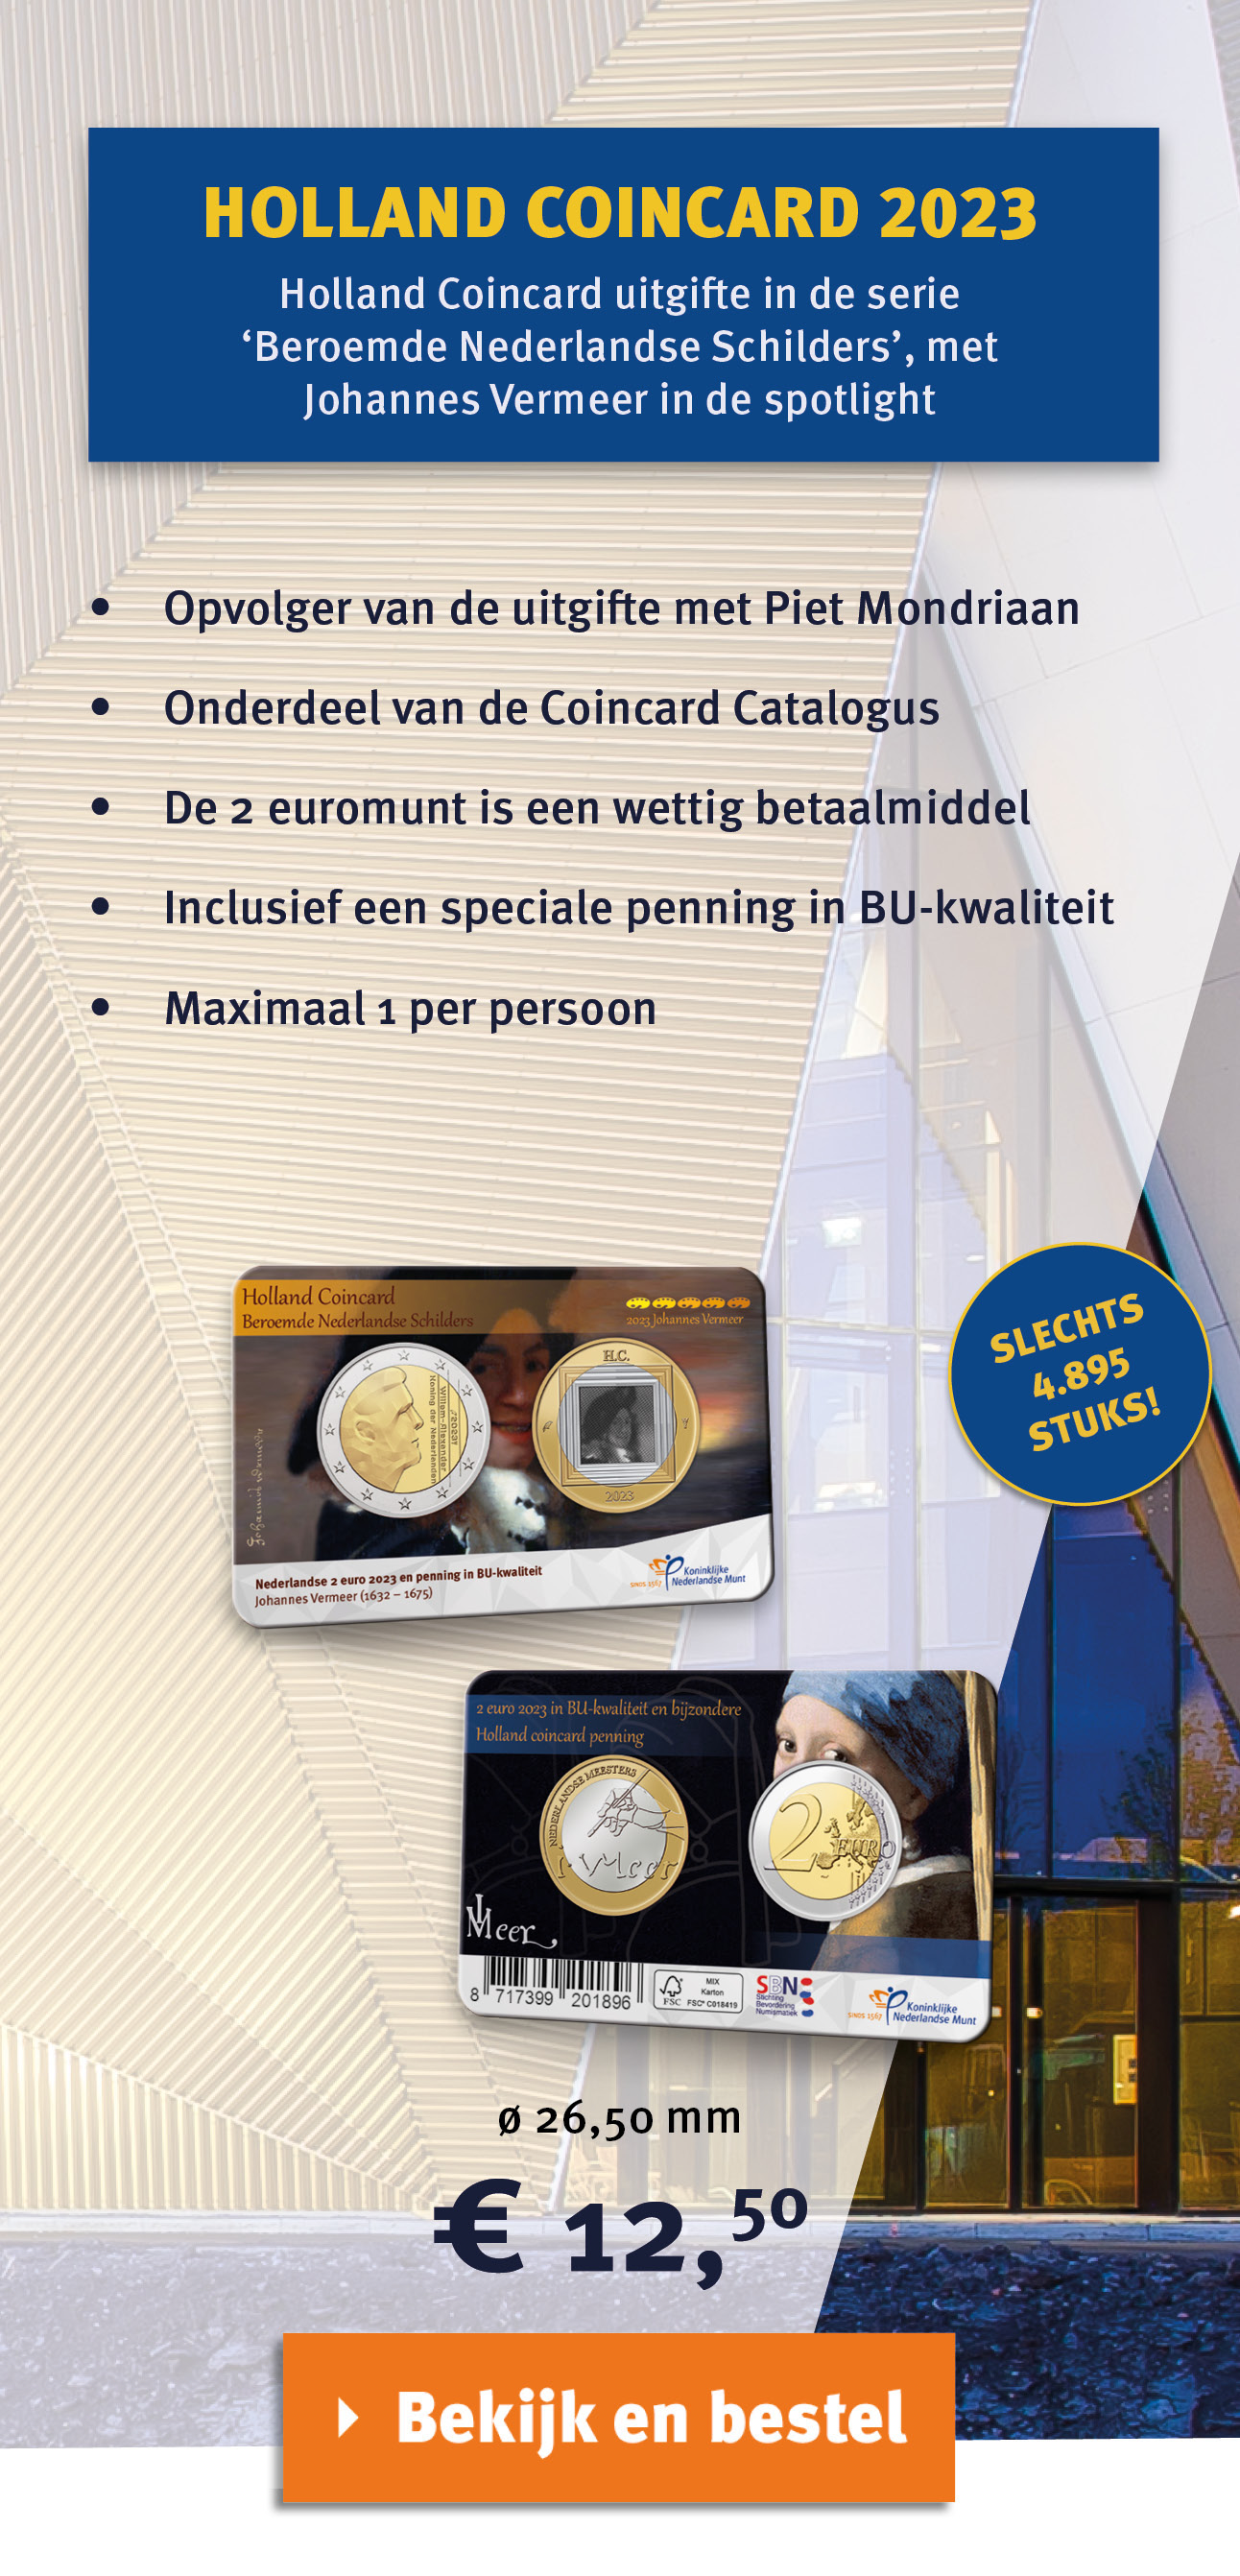 Bekijk en bestel: Holland Coincard 2023 